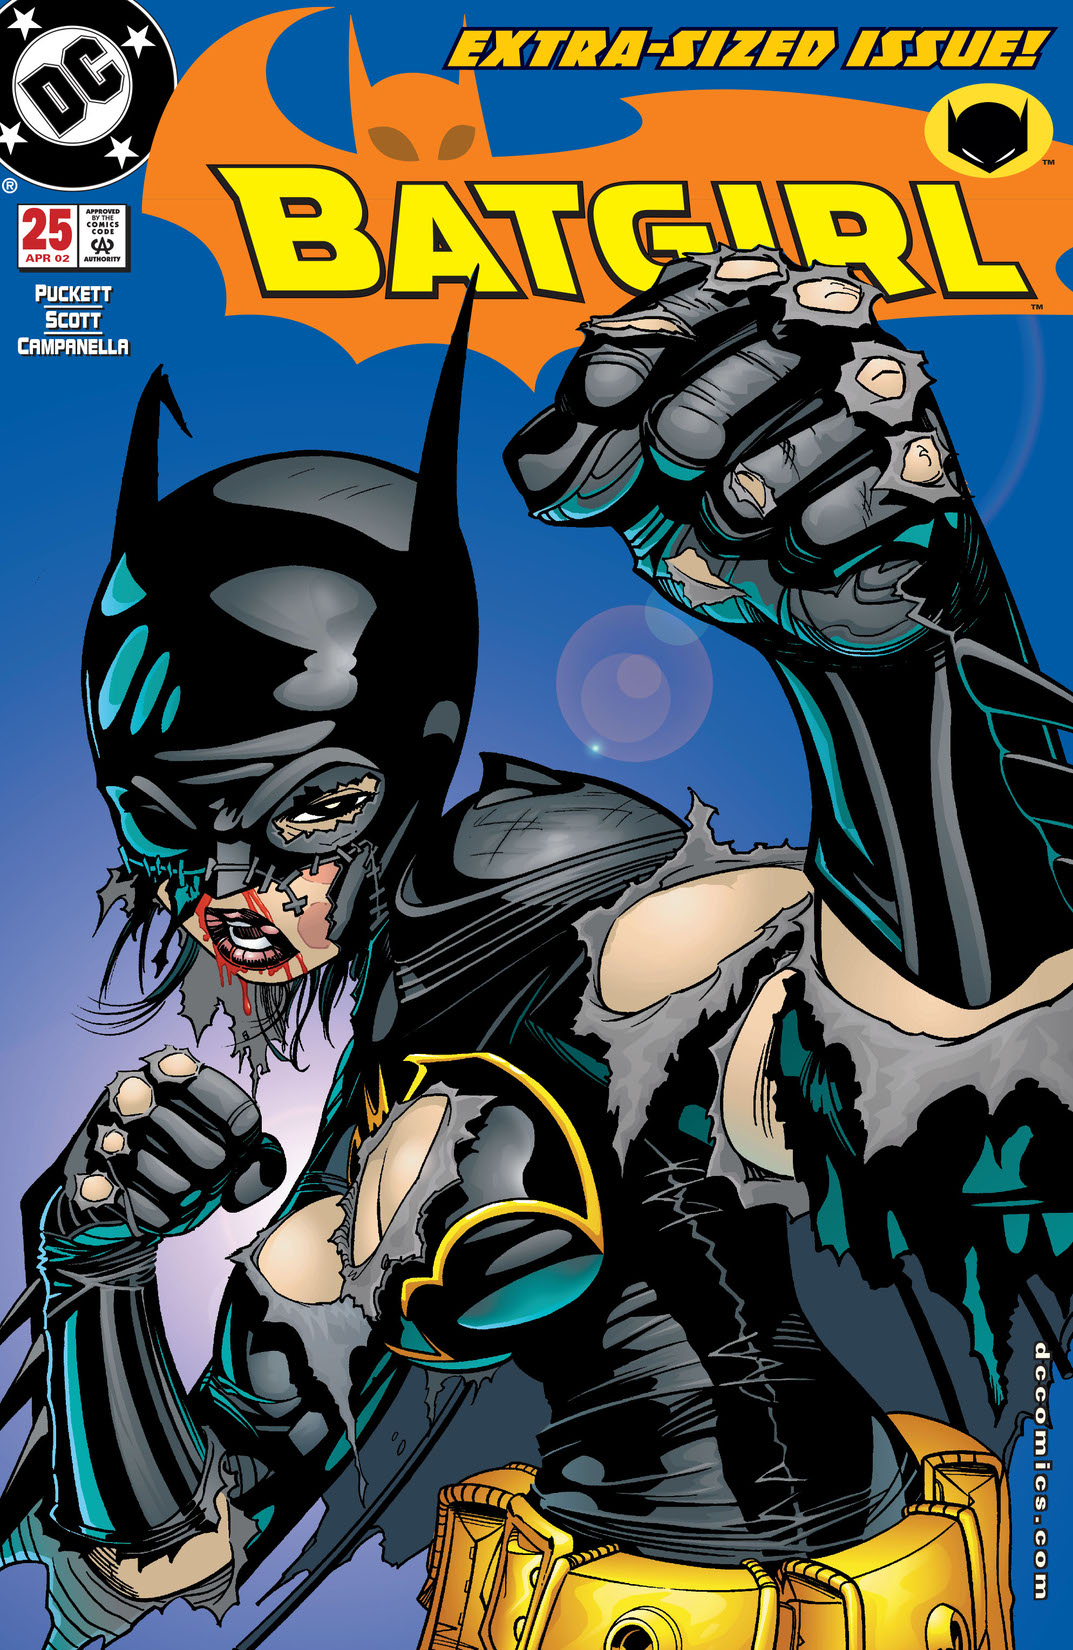 Batgirl (2000-) #25 preview images